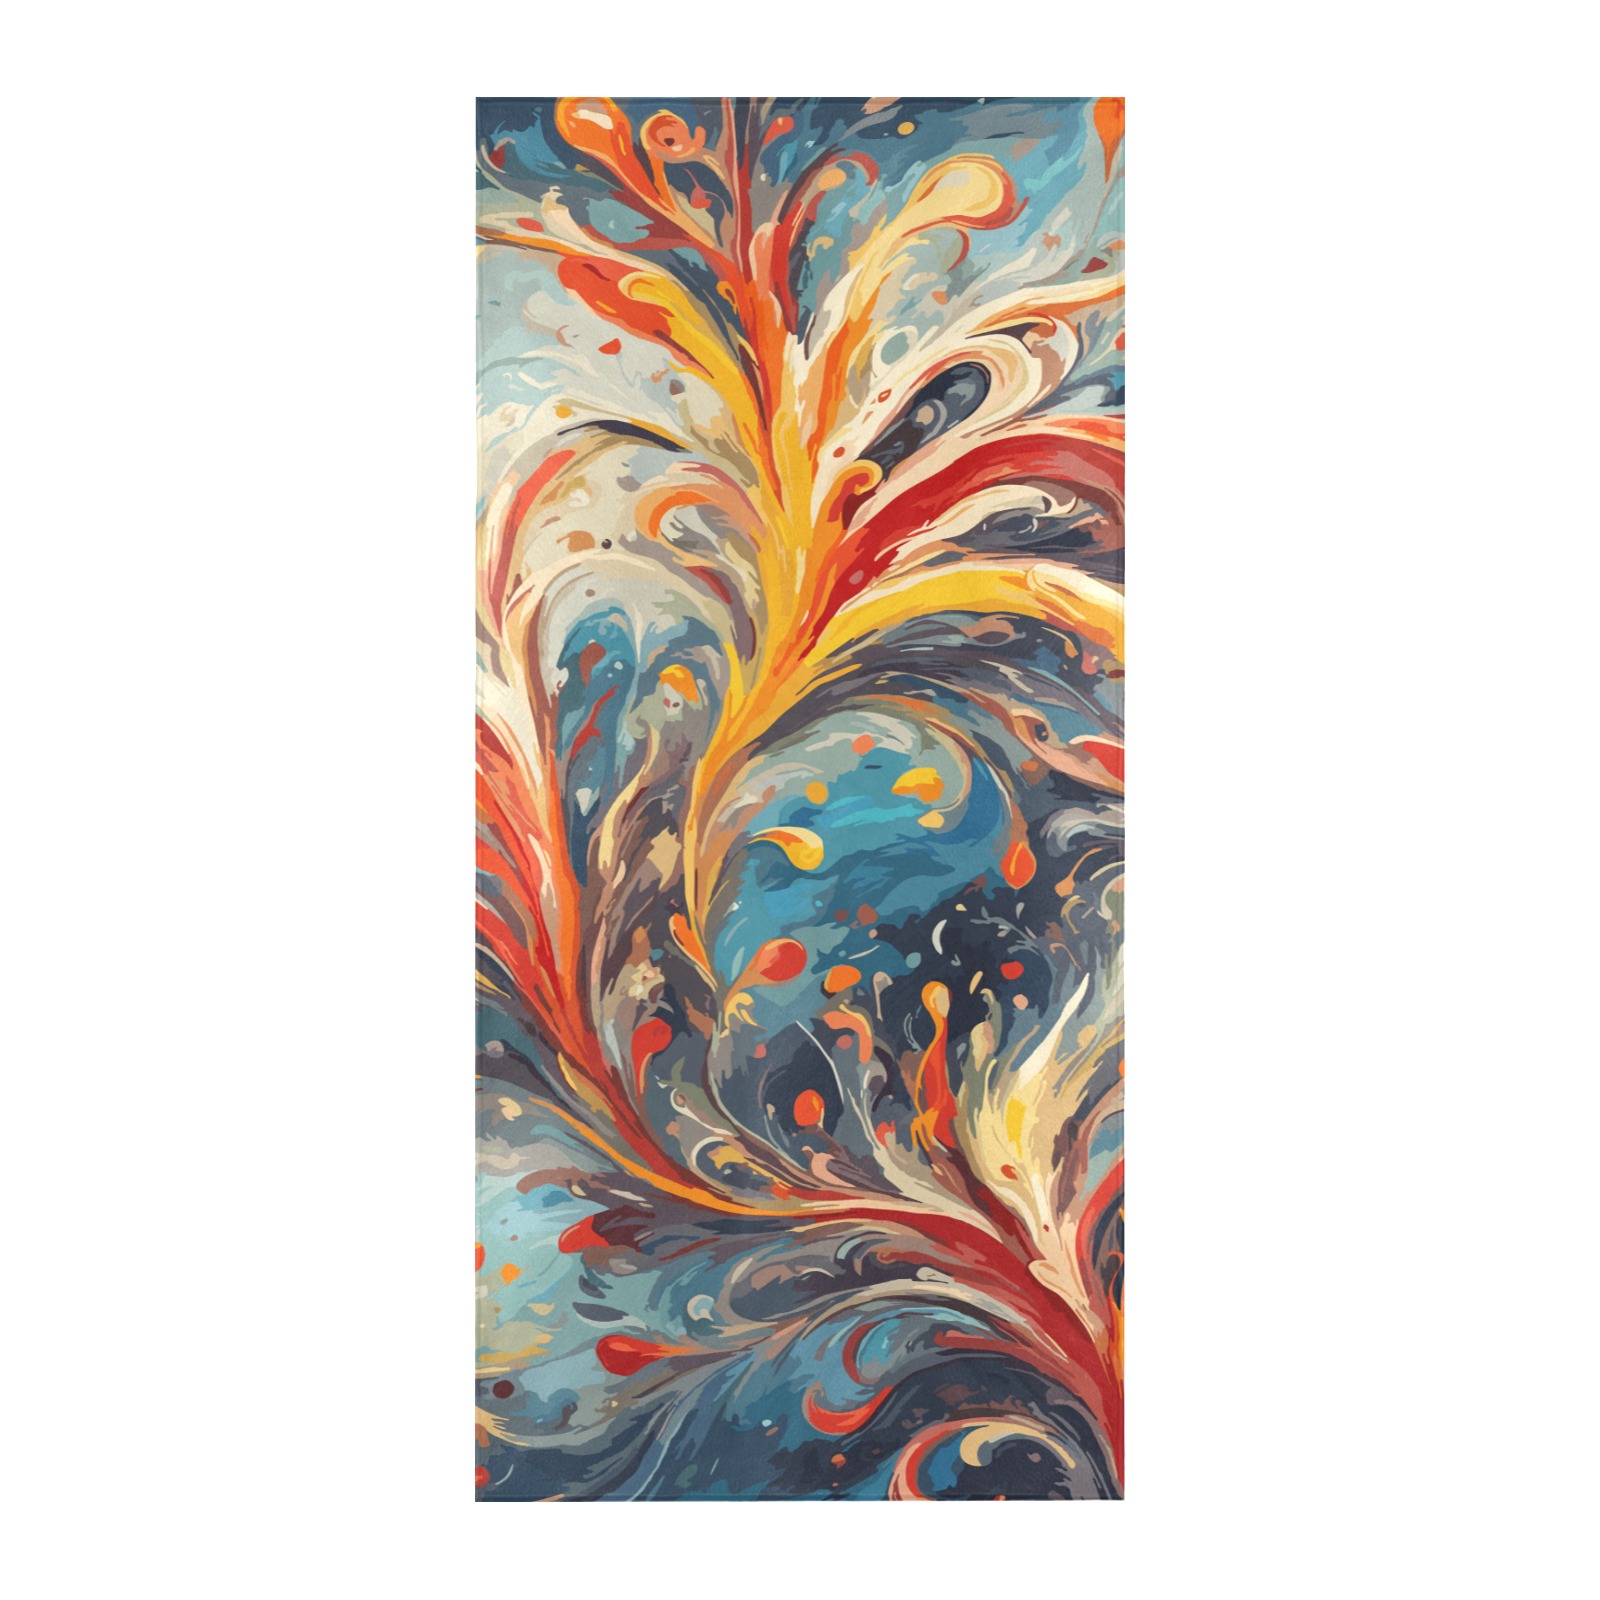 Increadible decorative floral ornamental art. Beach Towel 32"x 71"